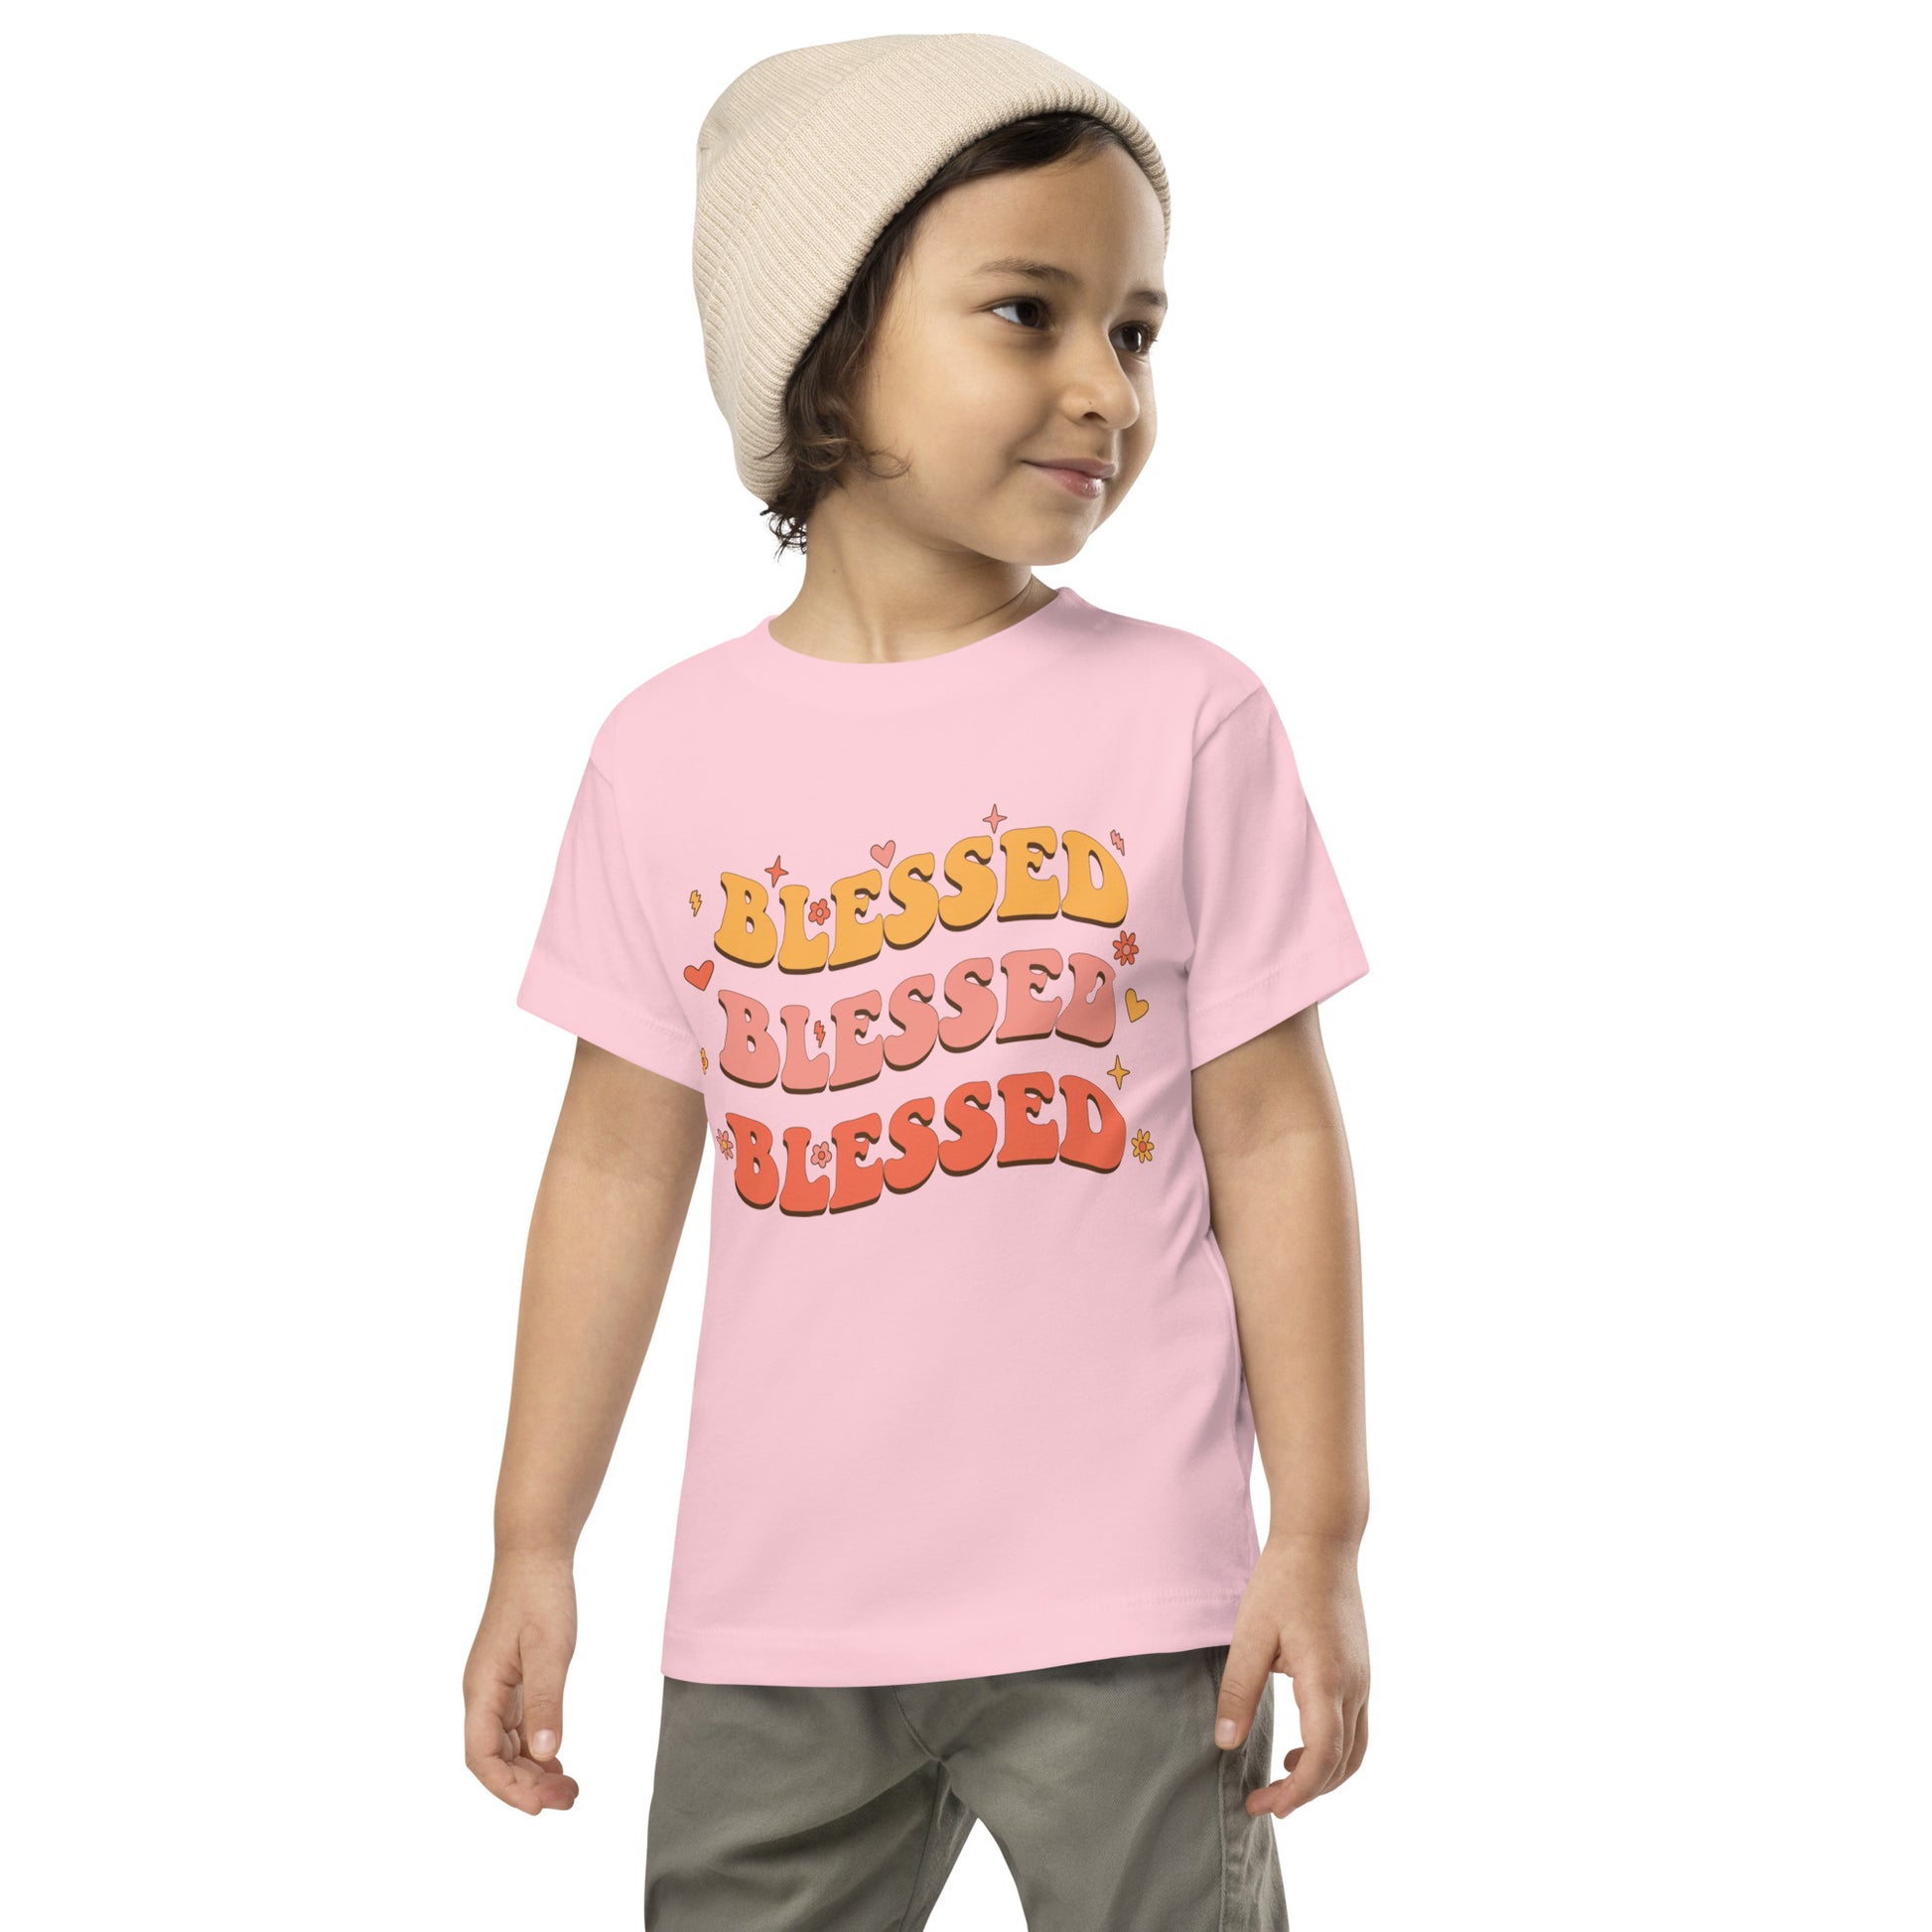 Blessed Toddler Short Sleeve T-Shirt - Humble & Faithful Co.